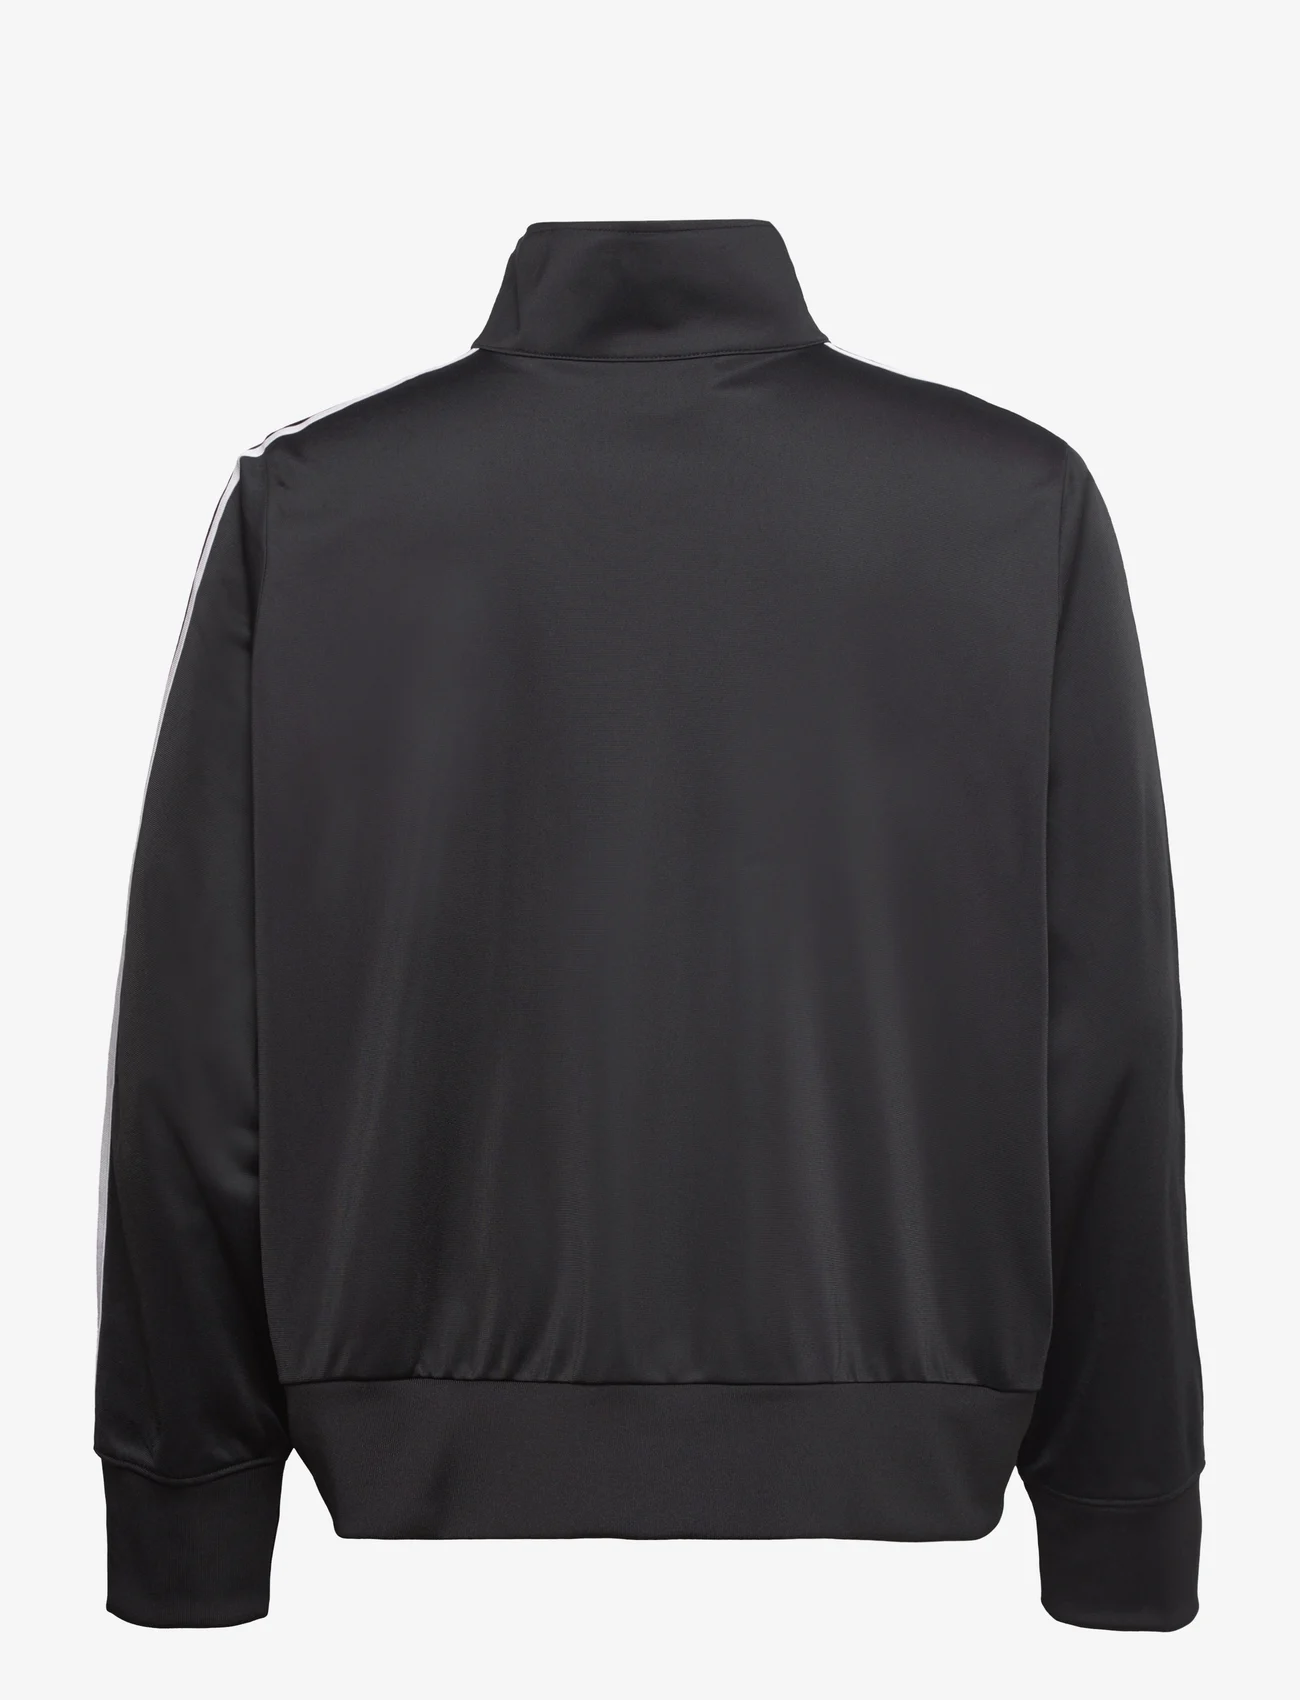 adidas Originals - FIREBIRD TT - sweatshirts - black - 1